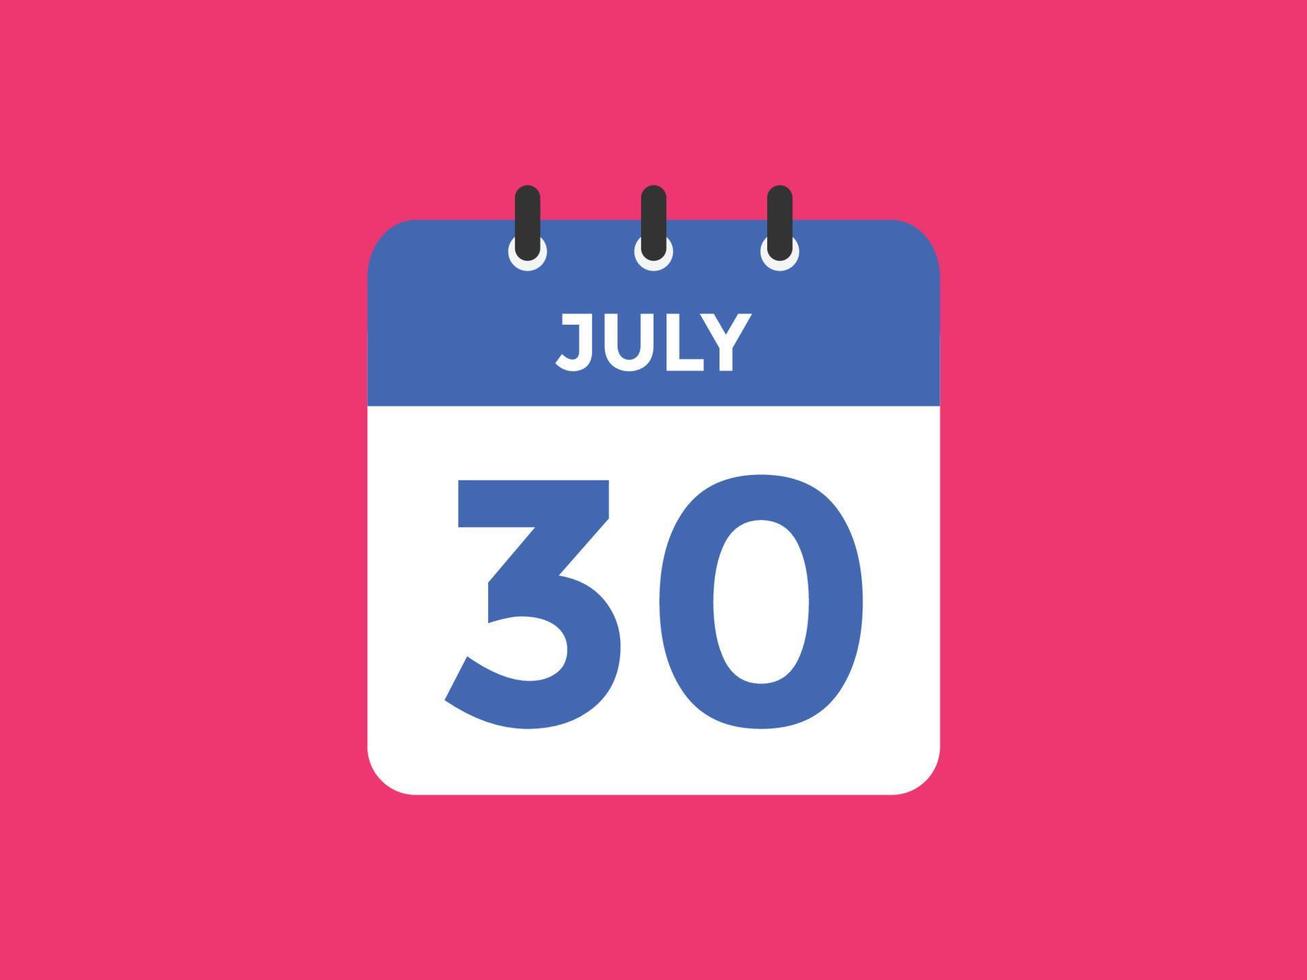 july 30 calendar reminder. 30th july daily calendar icon template. Calendar 30th july icon Design template. Vector illustration